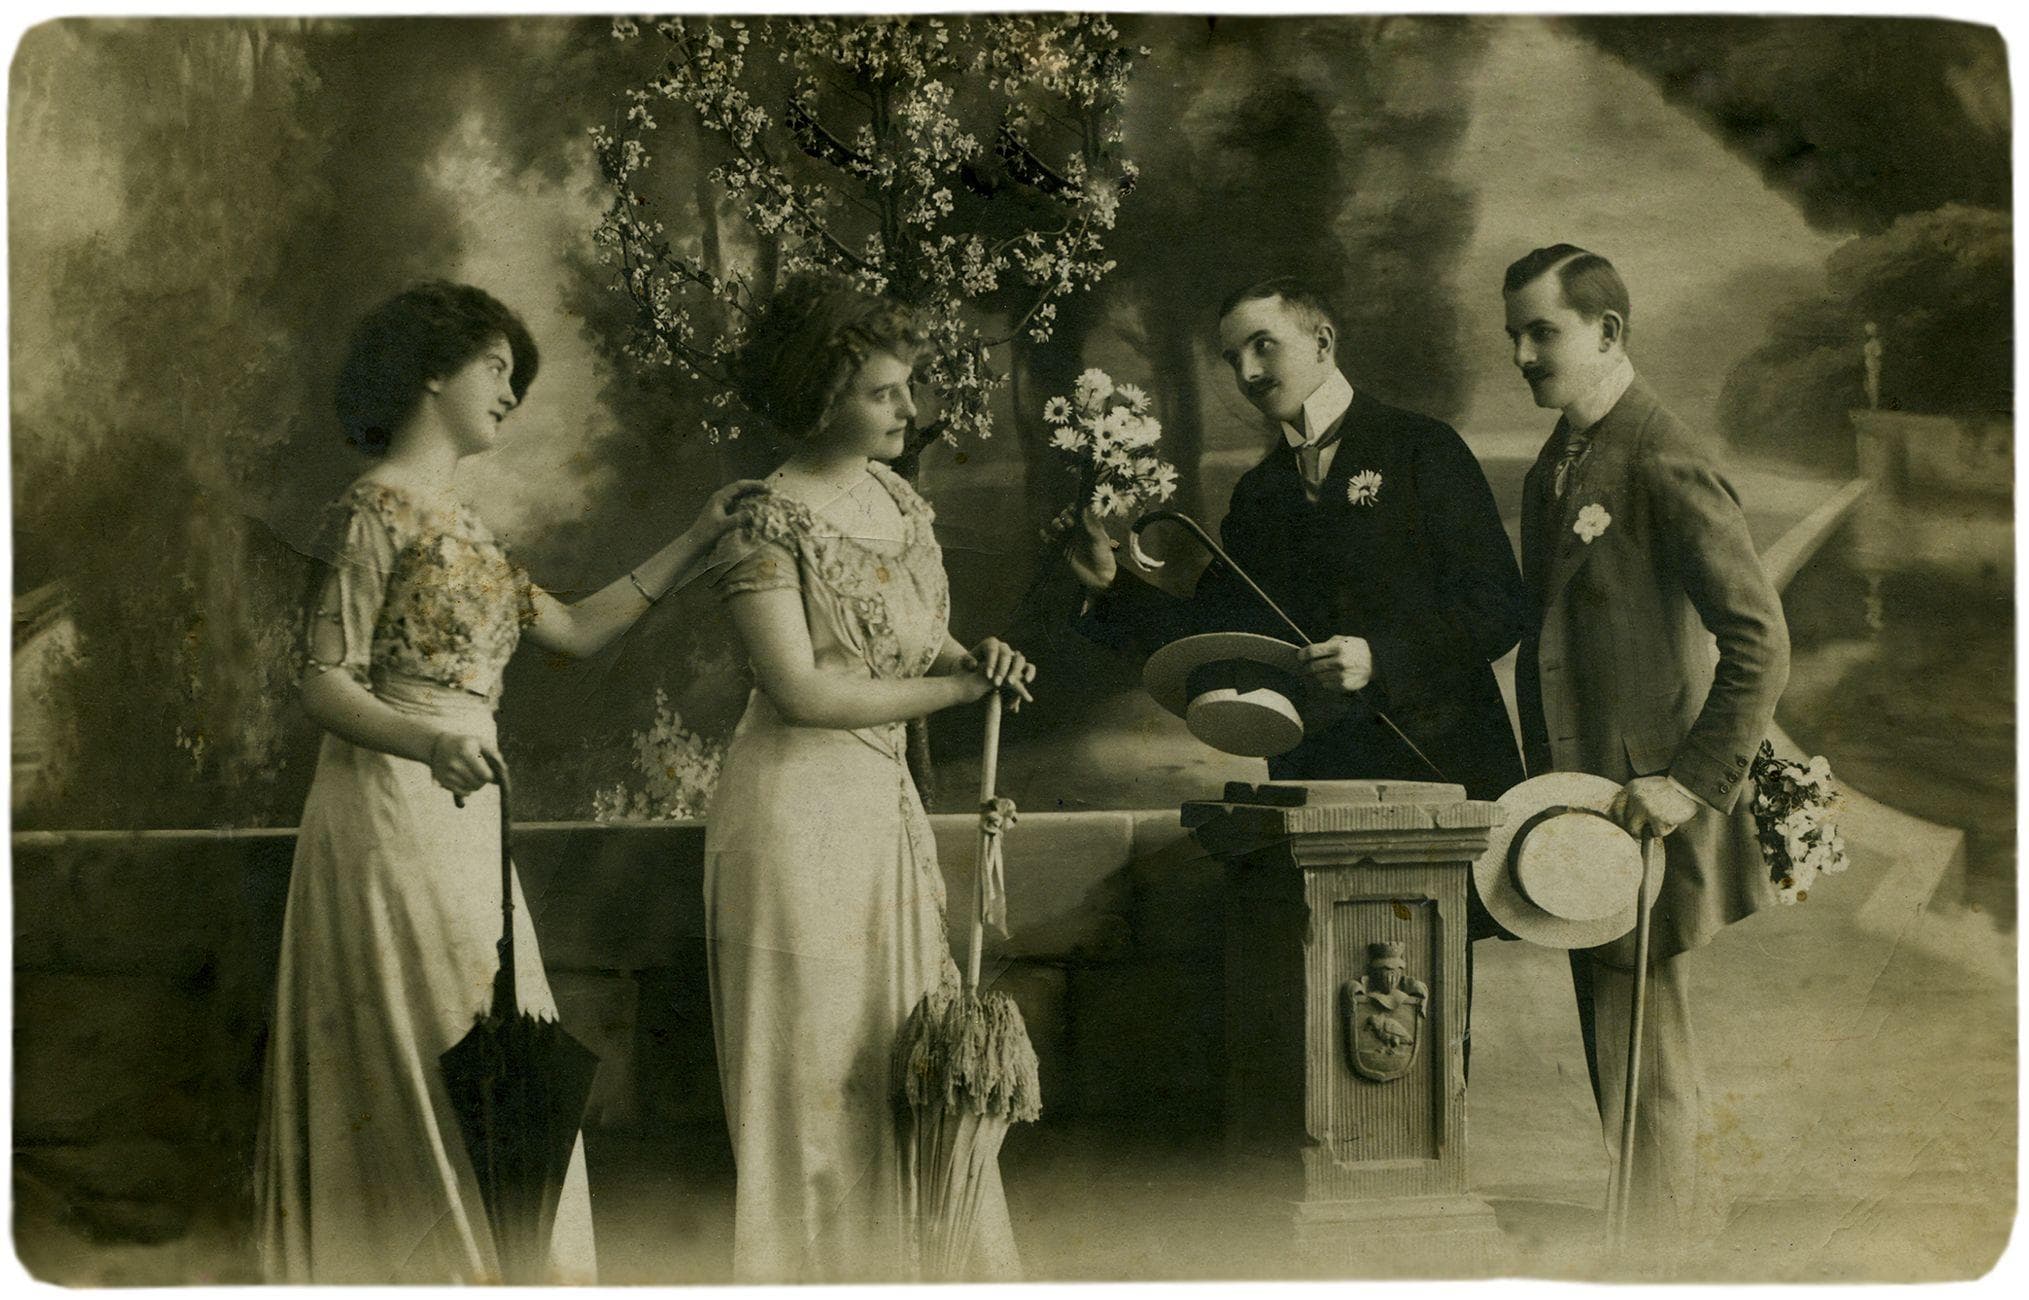 vintage photograph of Edwardian style group